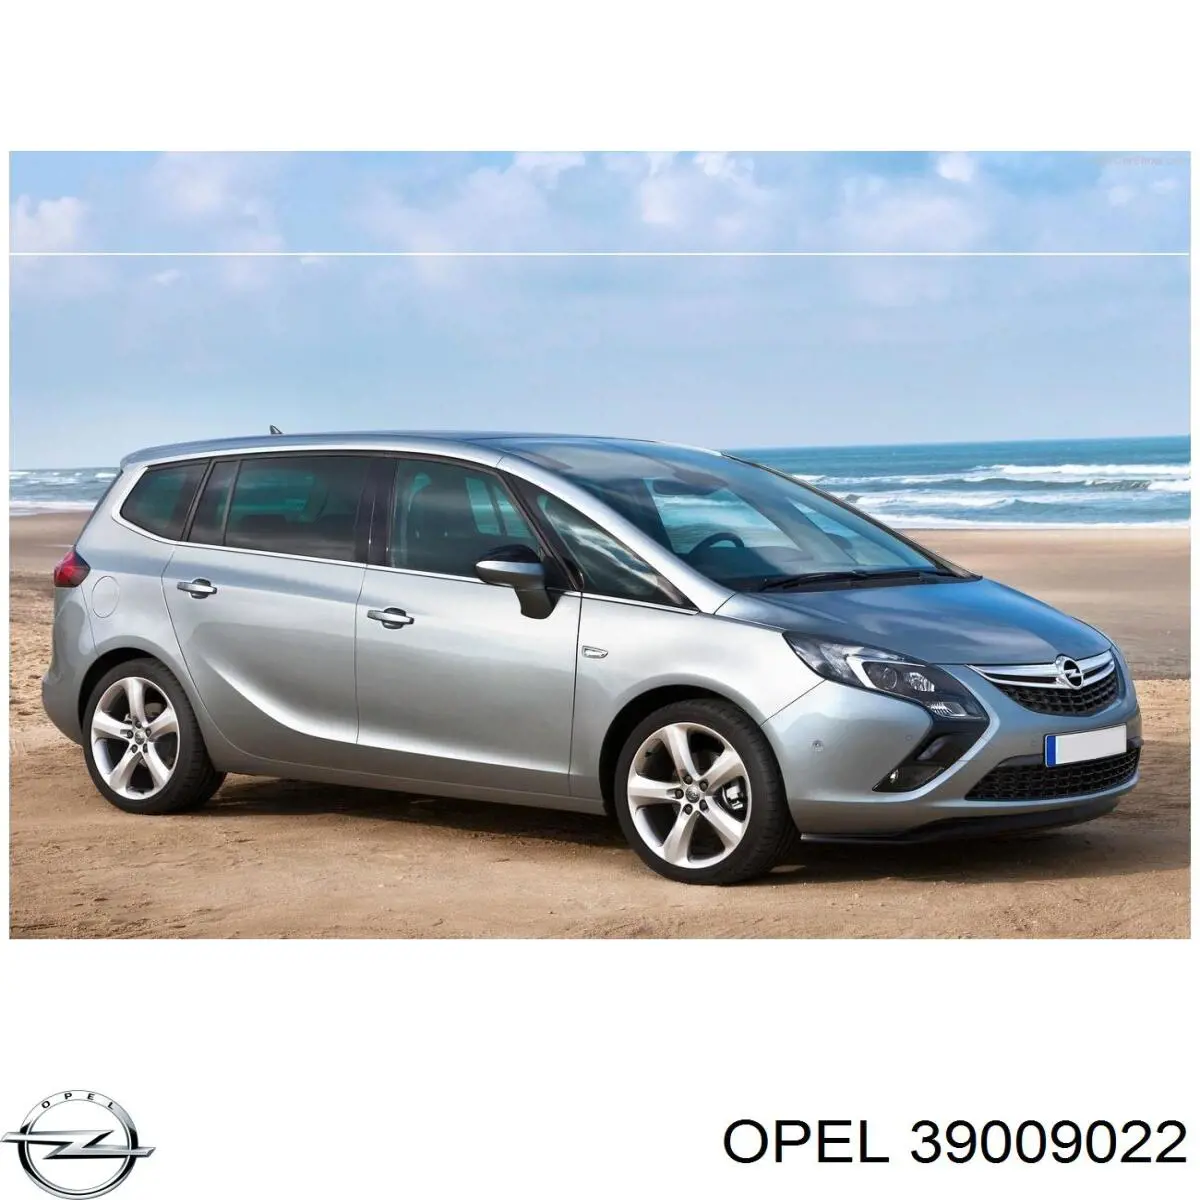 39009022 Opel фара правая